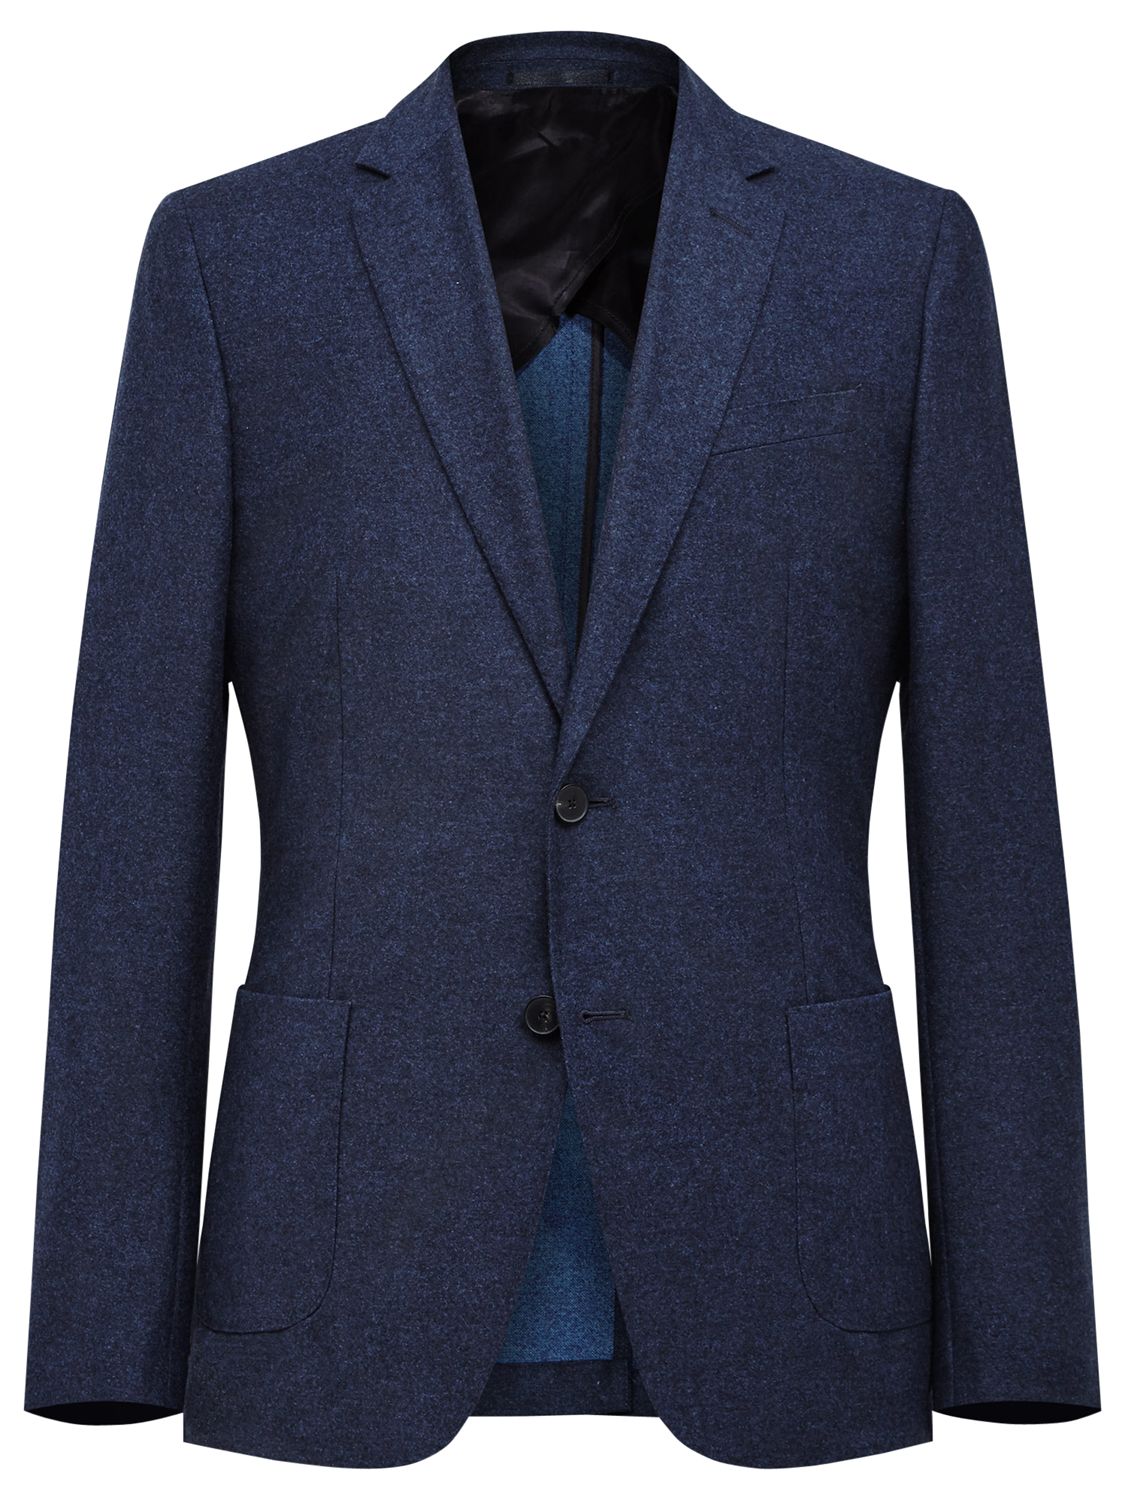 Reiss Teller Premium Slim Wool Blazer, Navy at John Lewis & Partners